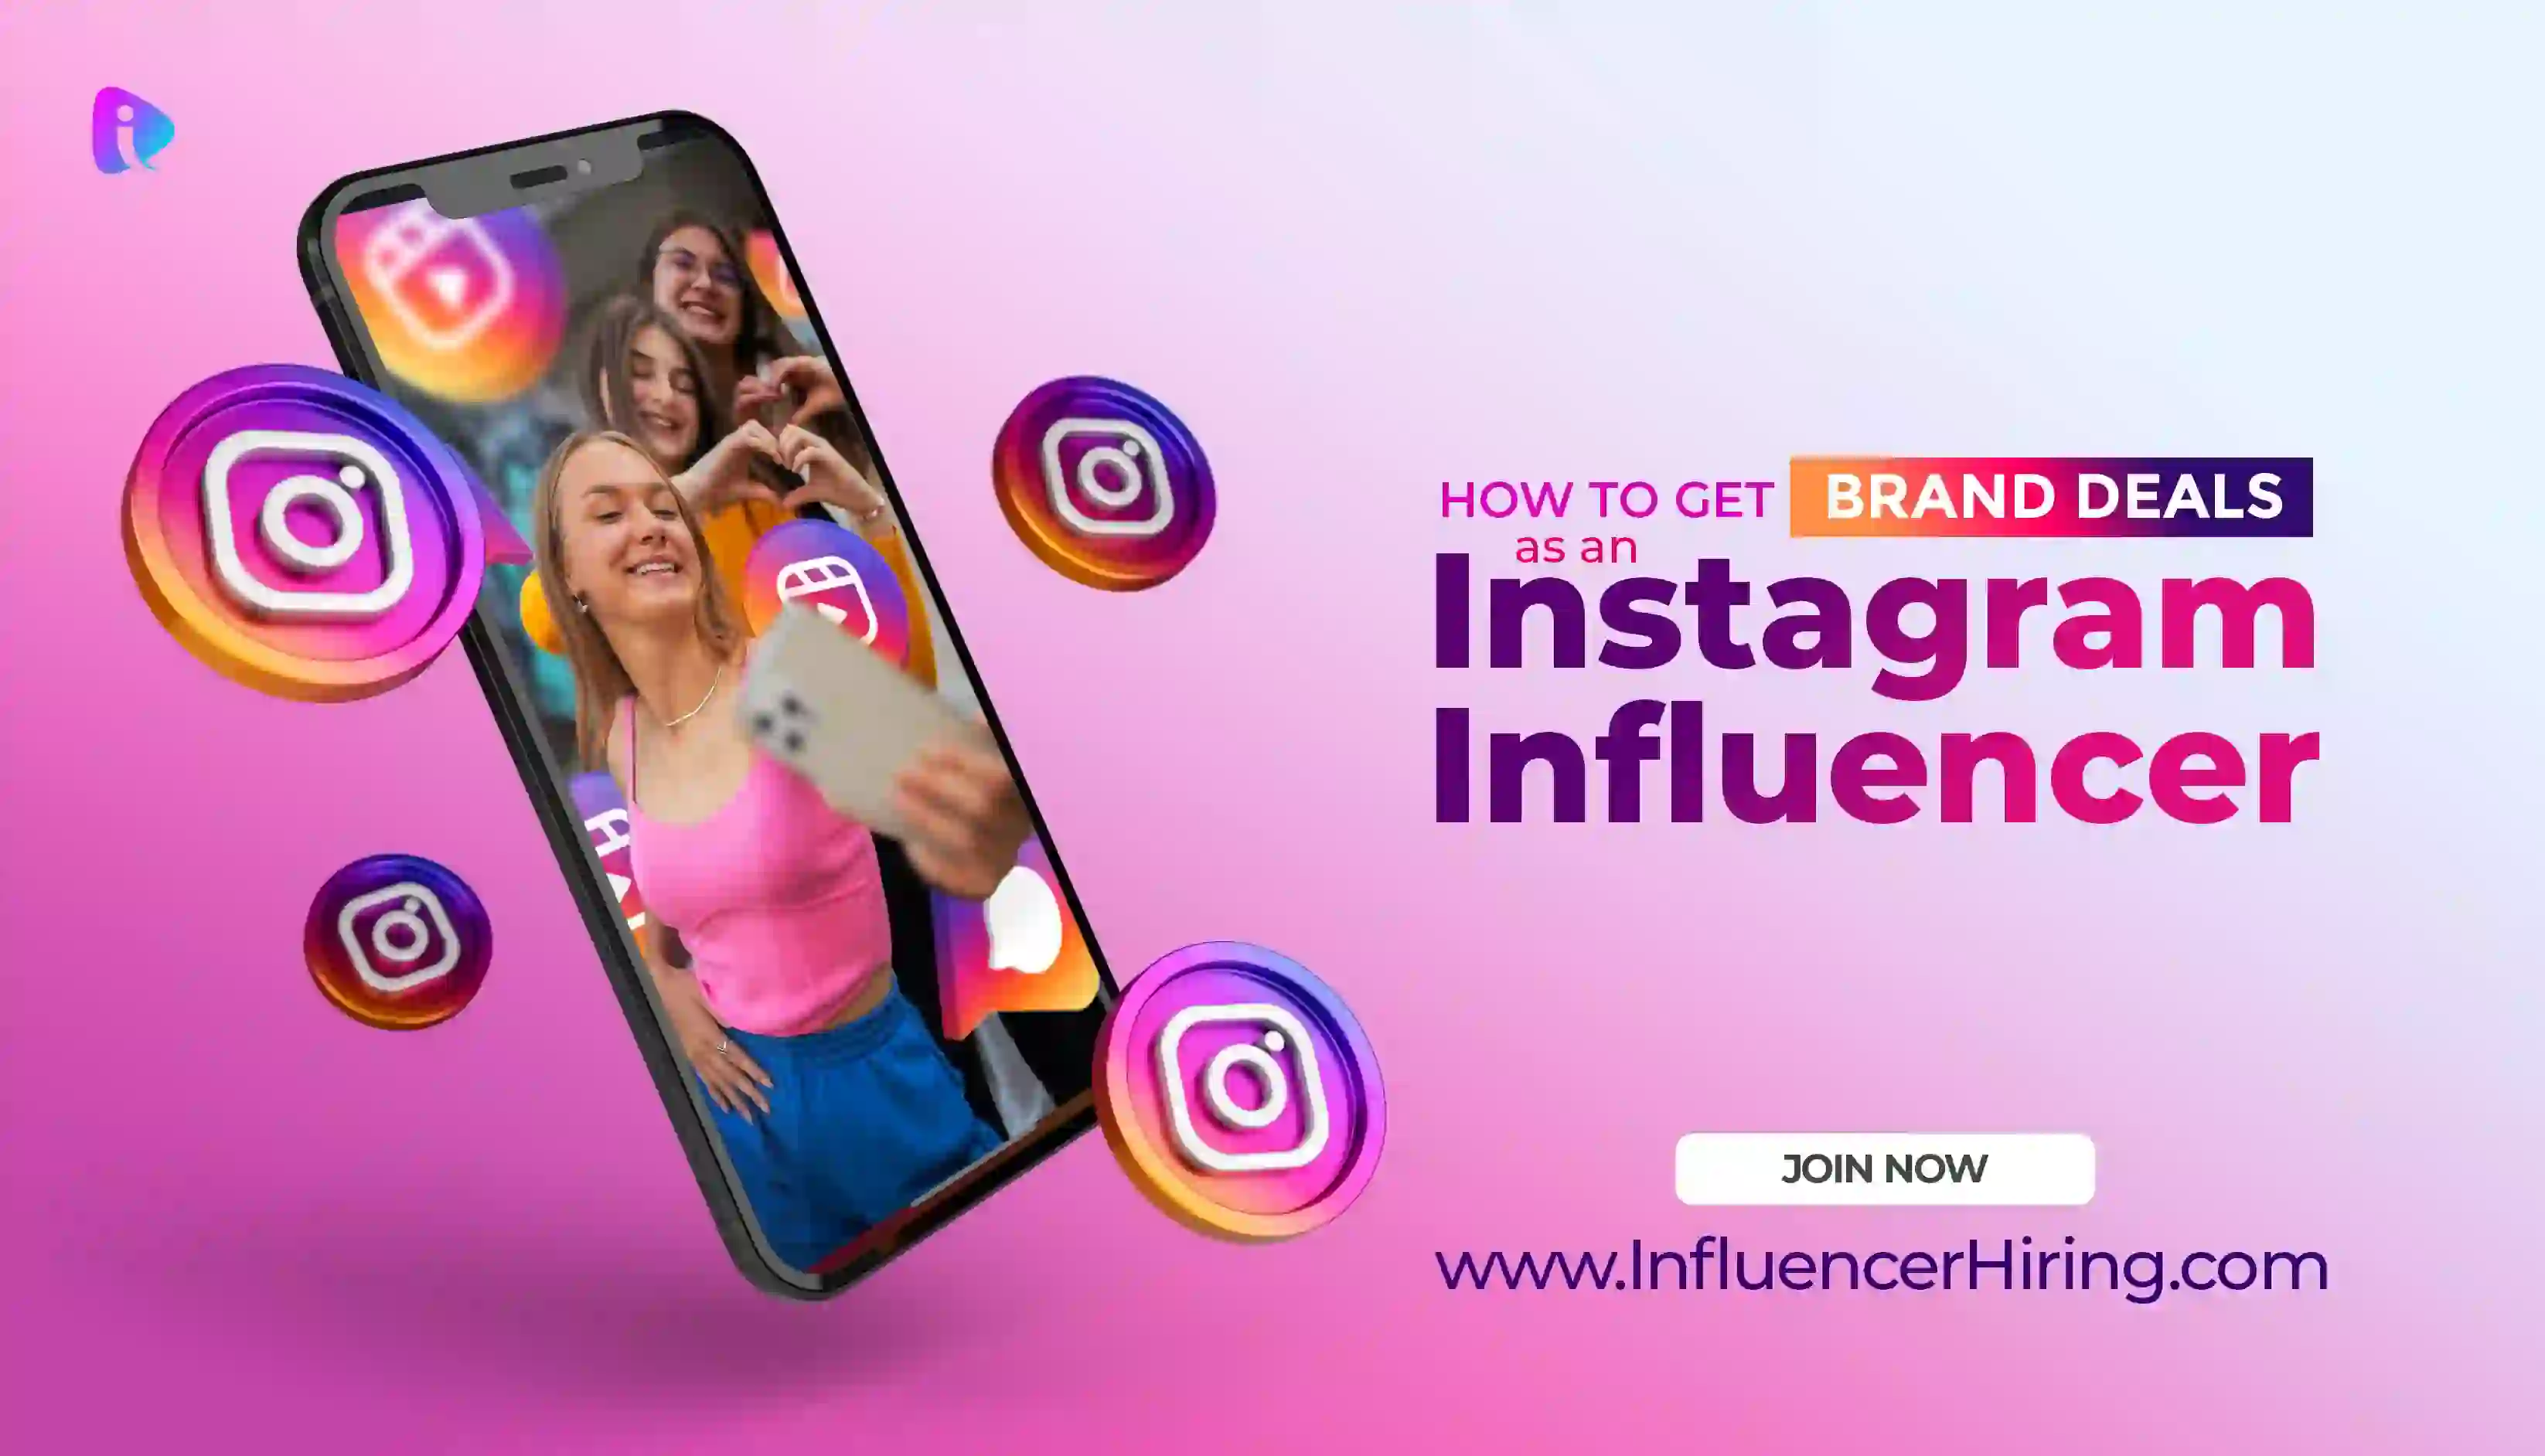 005_how_to_get_brand_deals_as_an__Instagram_influencer.webp